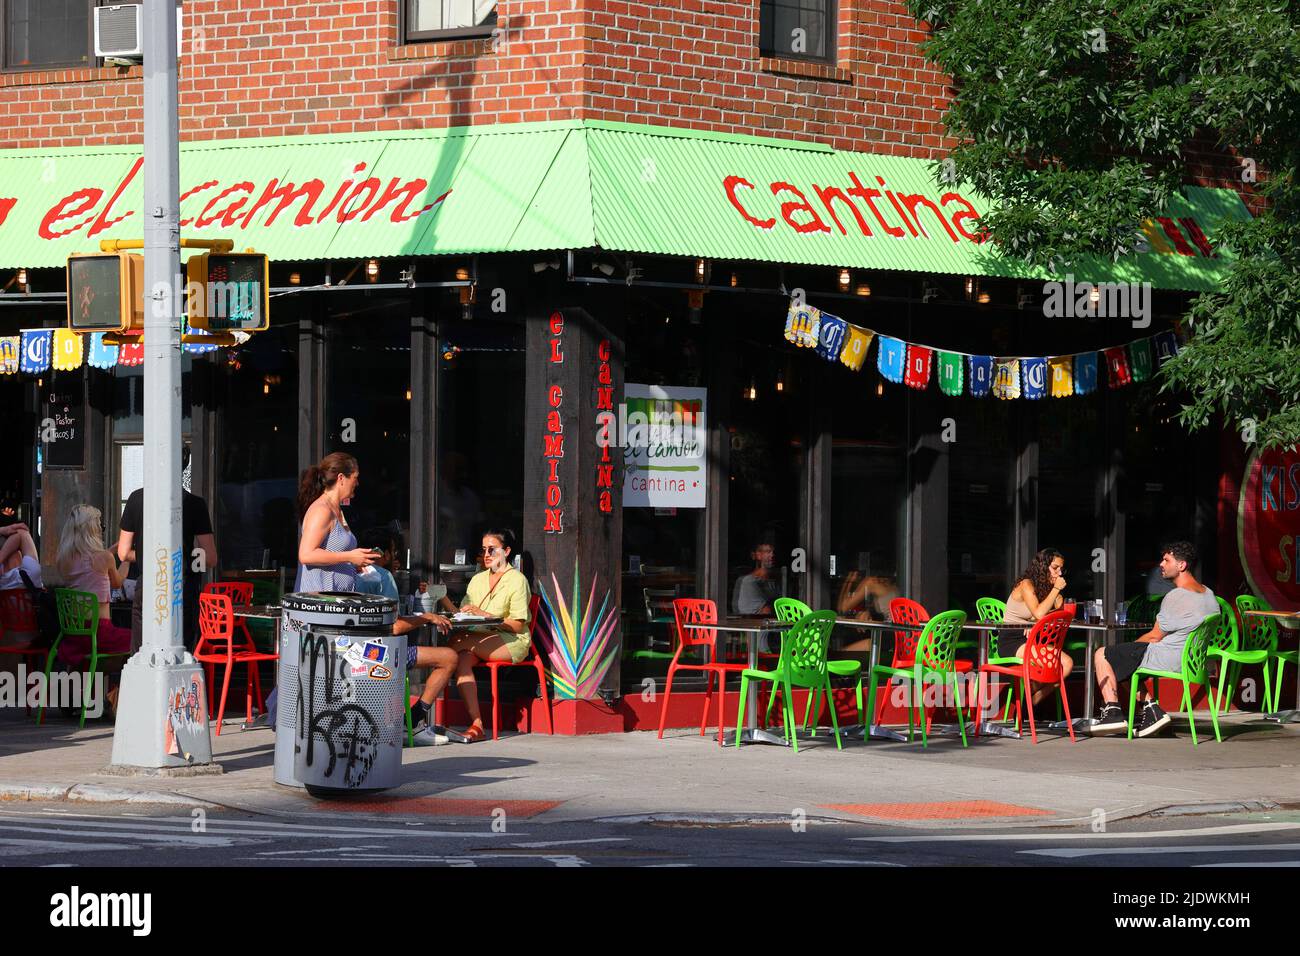 El Camion Cantina, 194 Avenue A, New York, NY. Façade extérieure d'un restaurant mexicain dans le quartier East Village de Manhattan. Banque D'Images